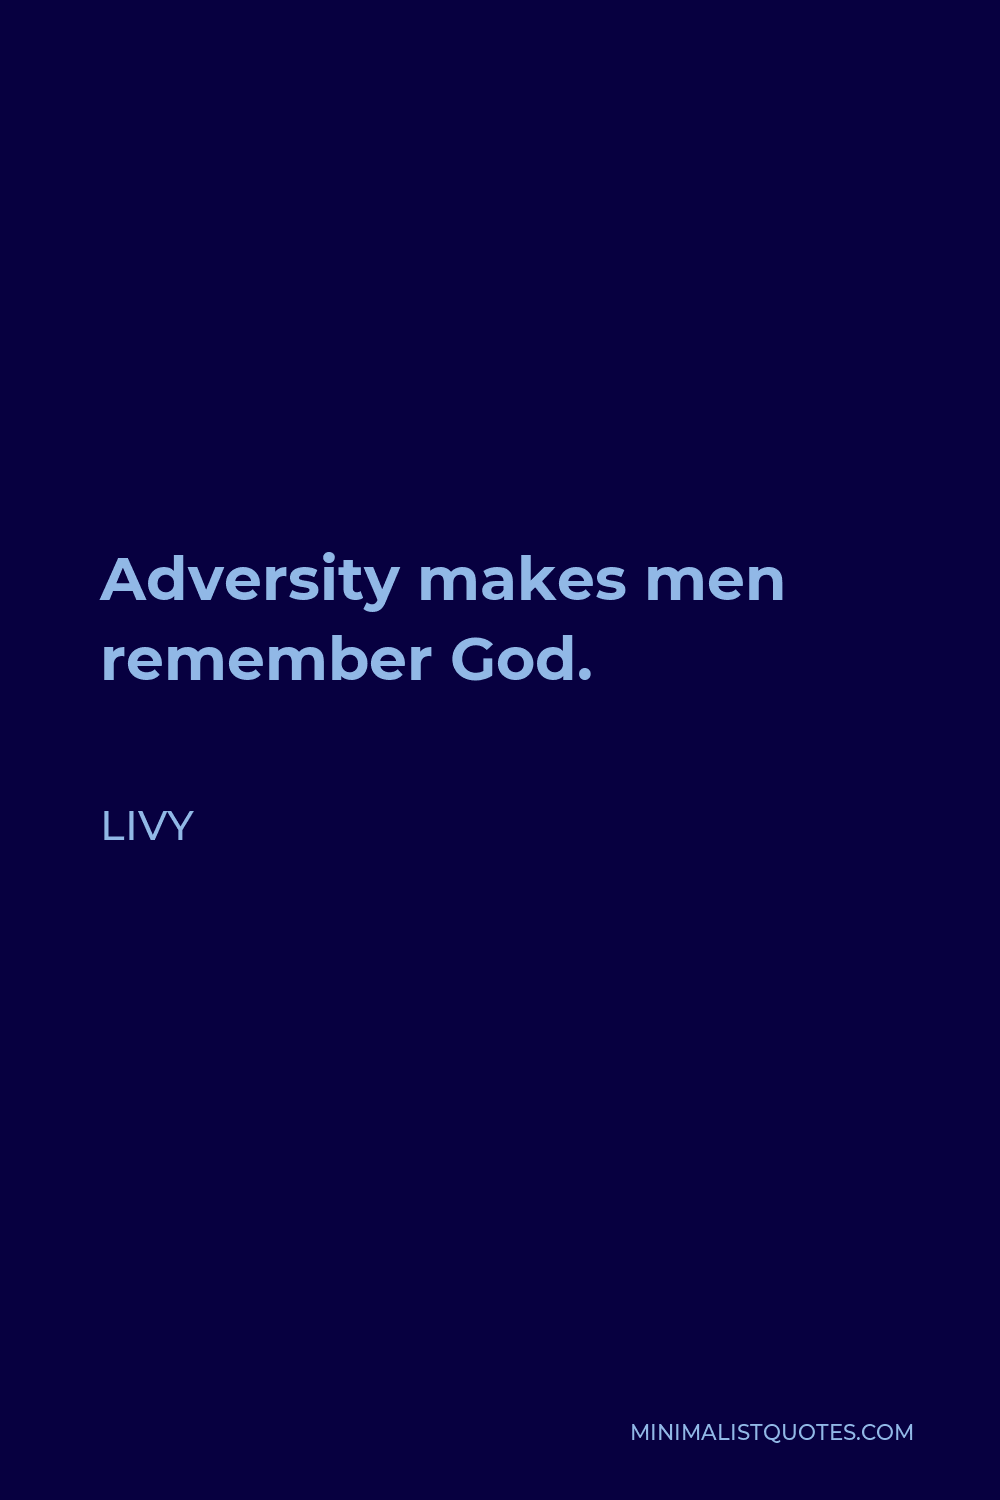 Livy Quote - Adversity makes men remember God.